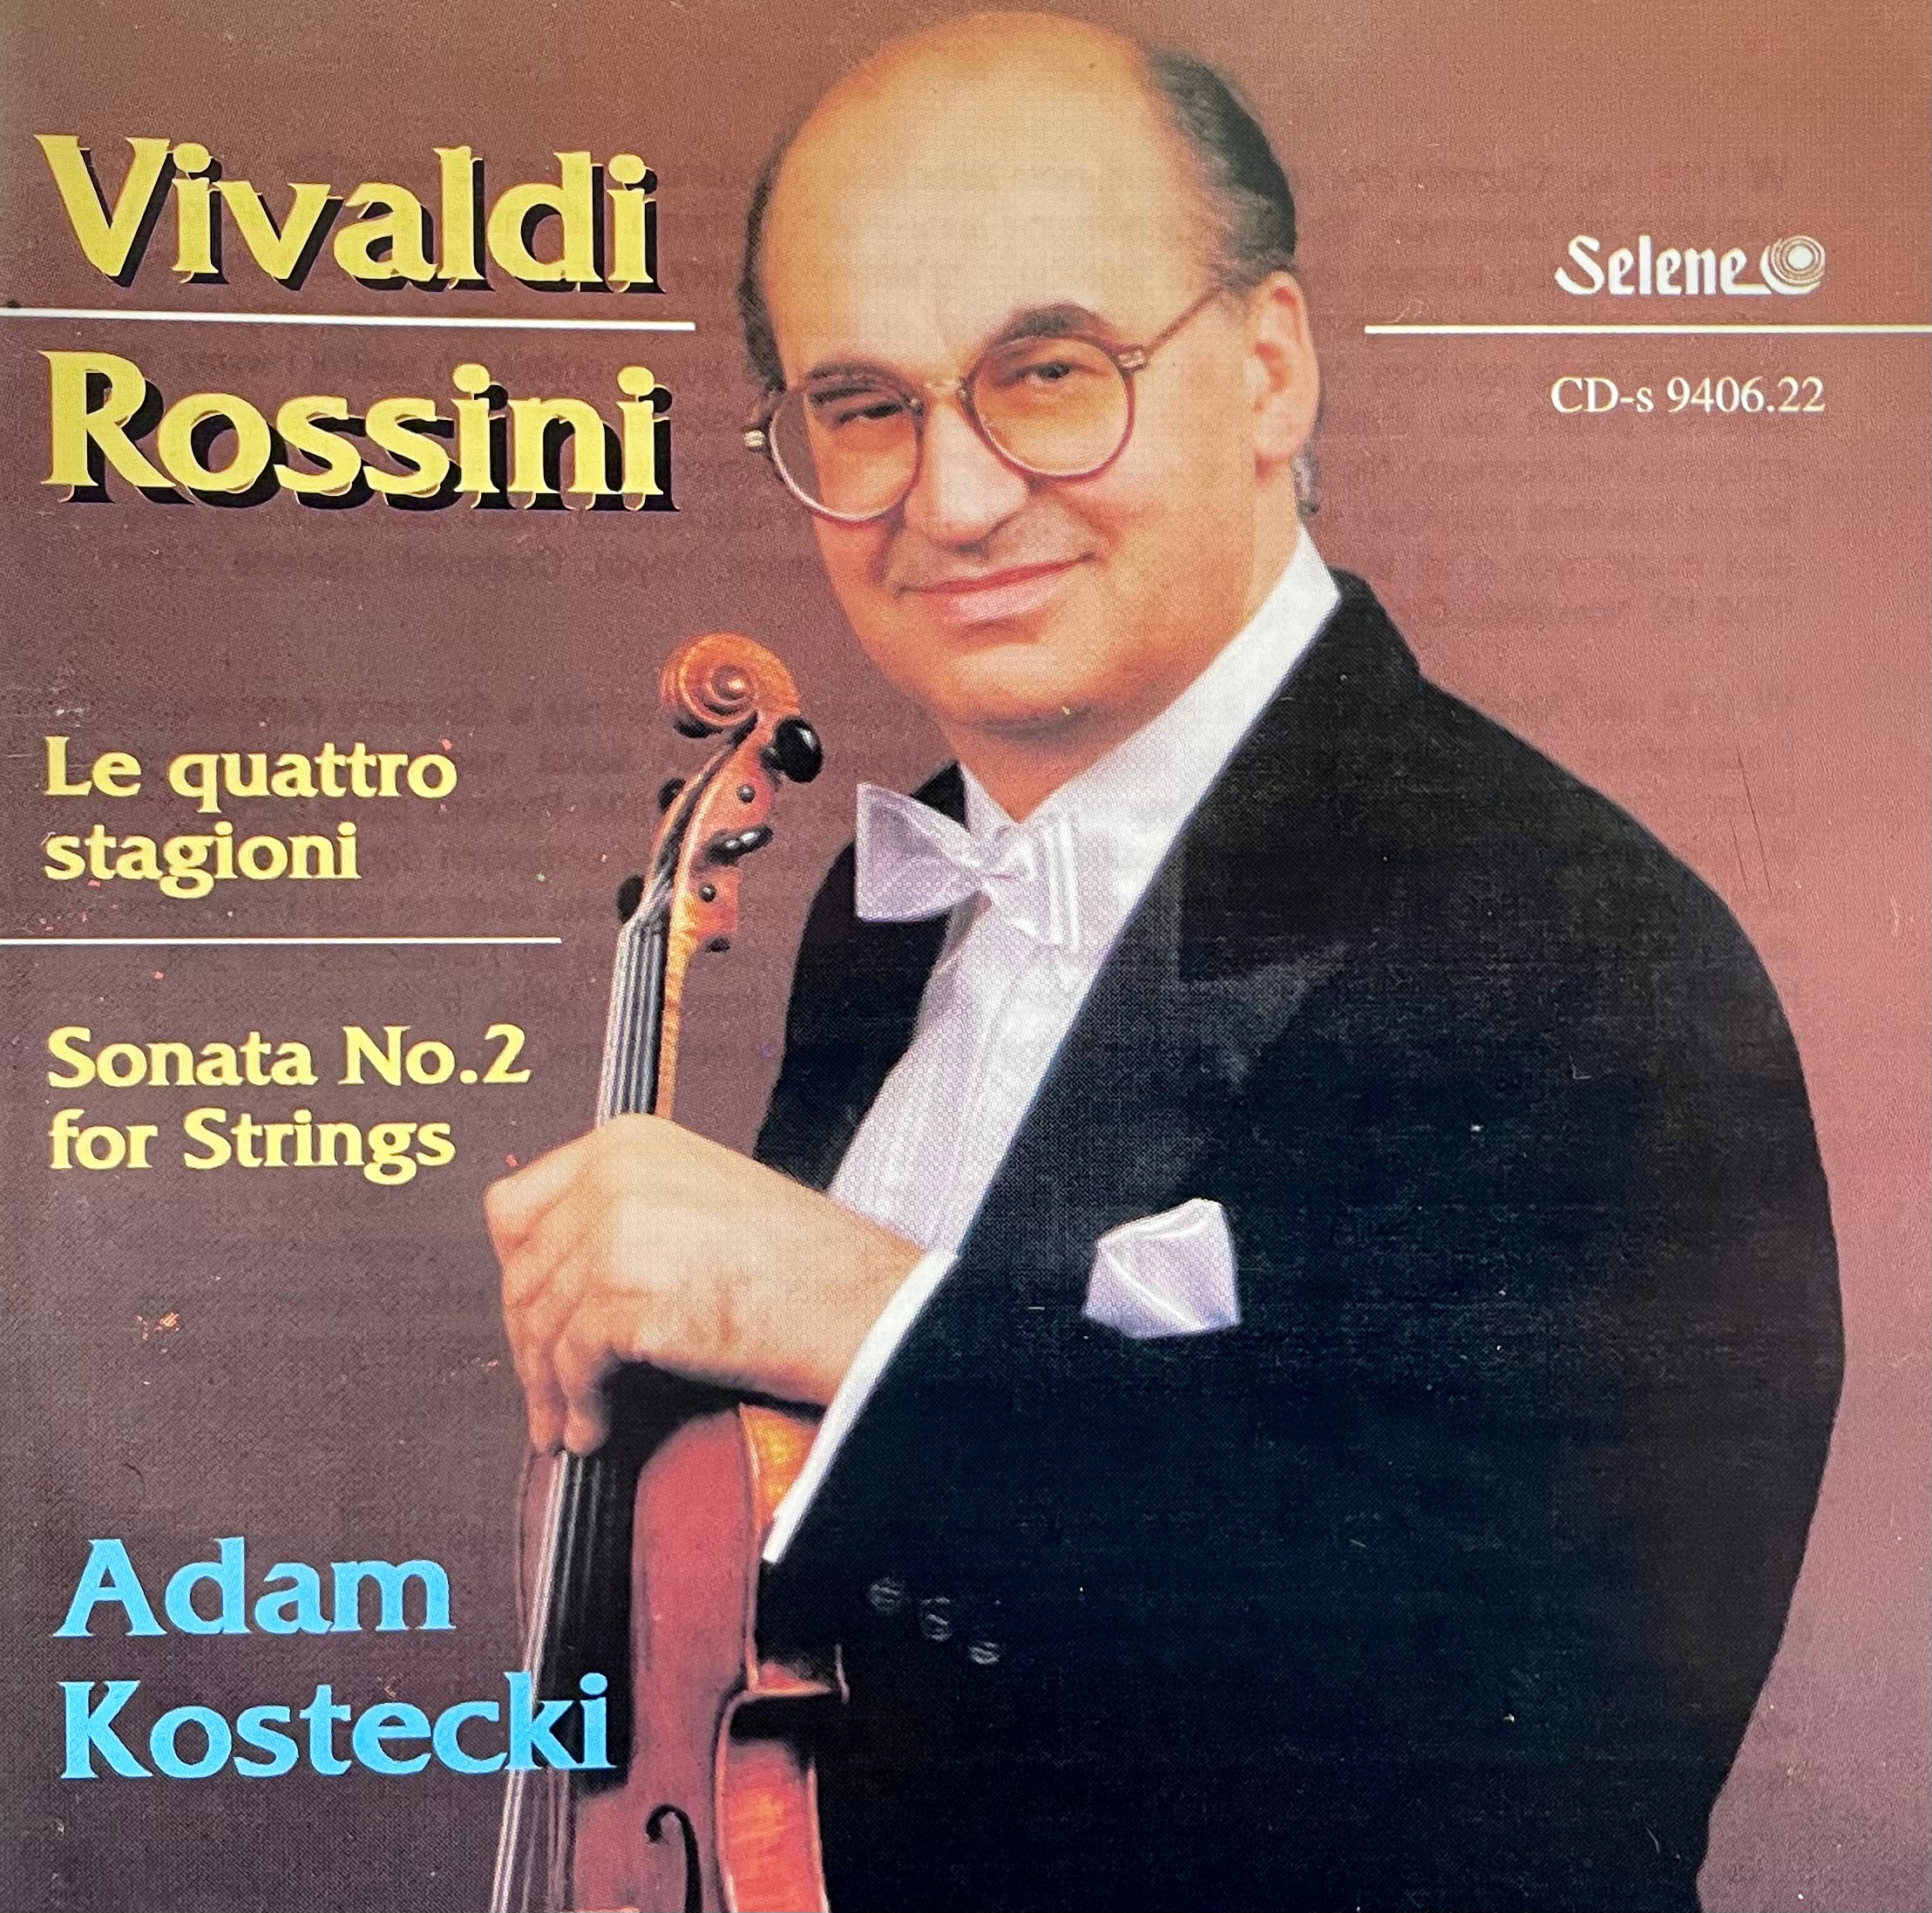 Vivaldi | Rossini - Adam Kostecki